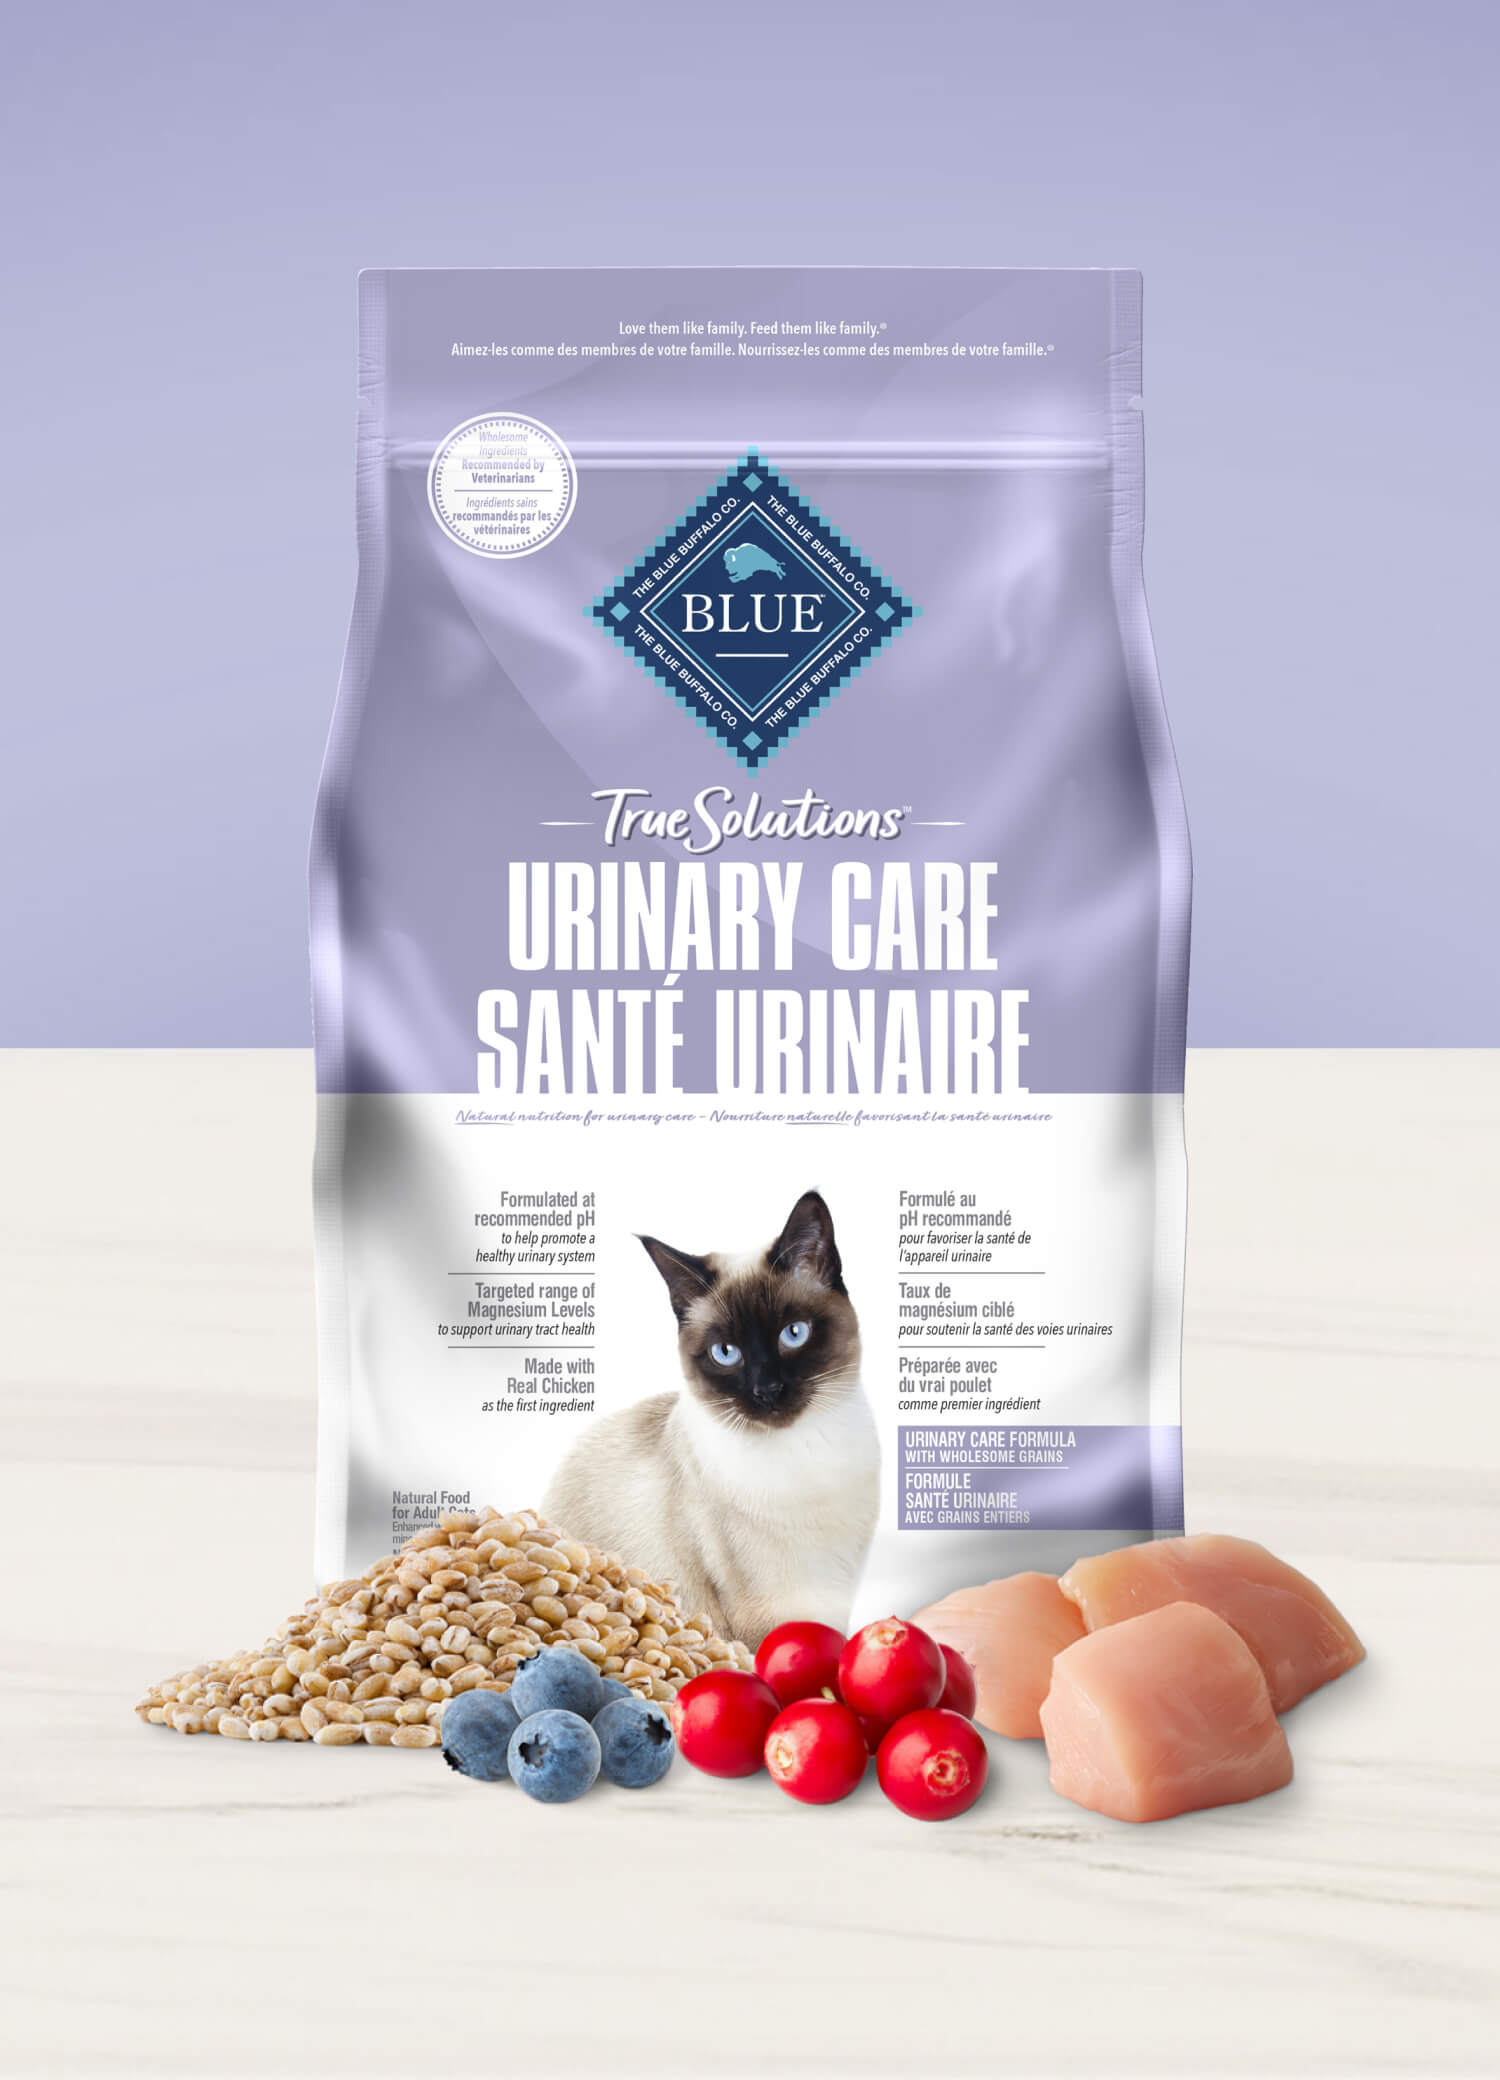 A bag of Blue True Solutions Adult Cat dry food Urinary Care Formula